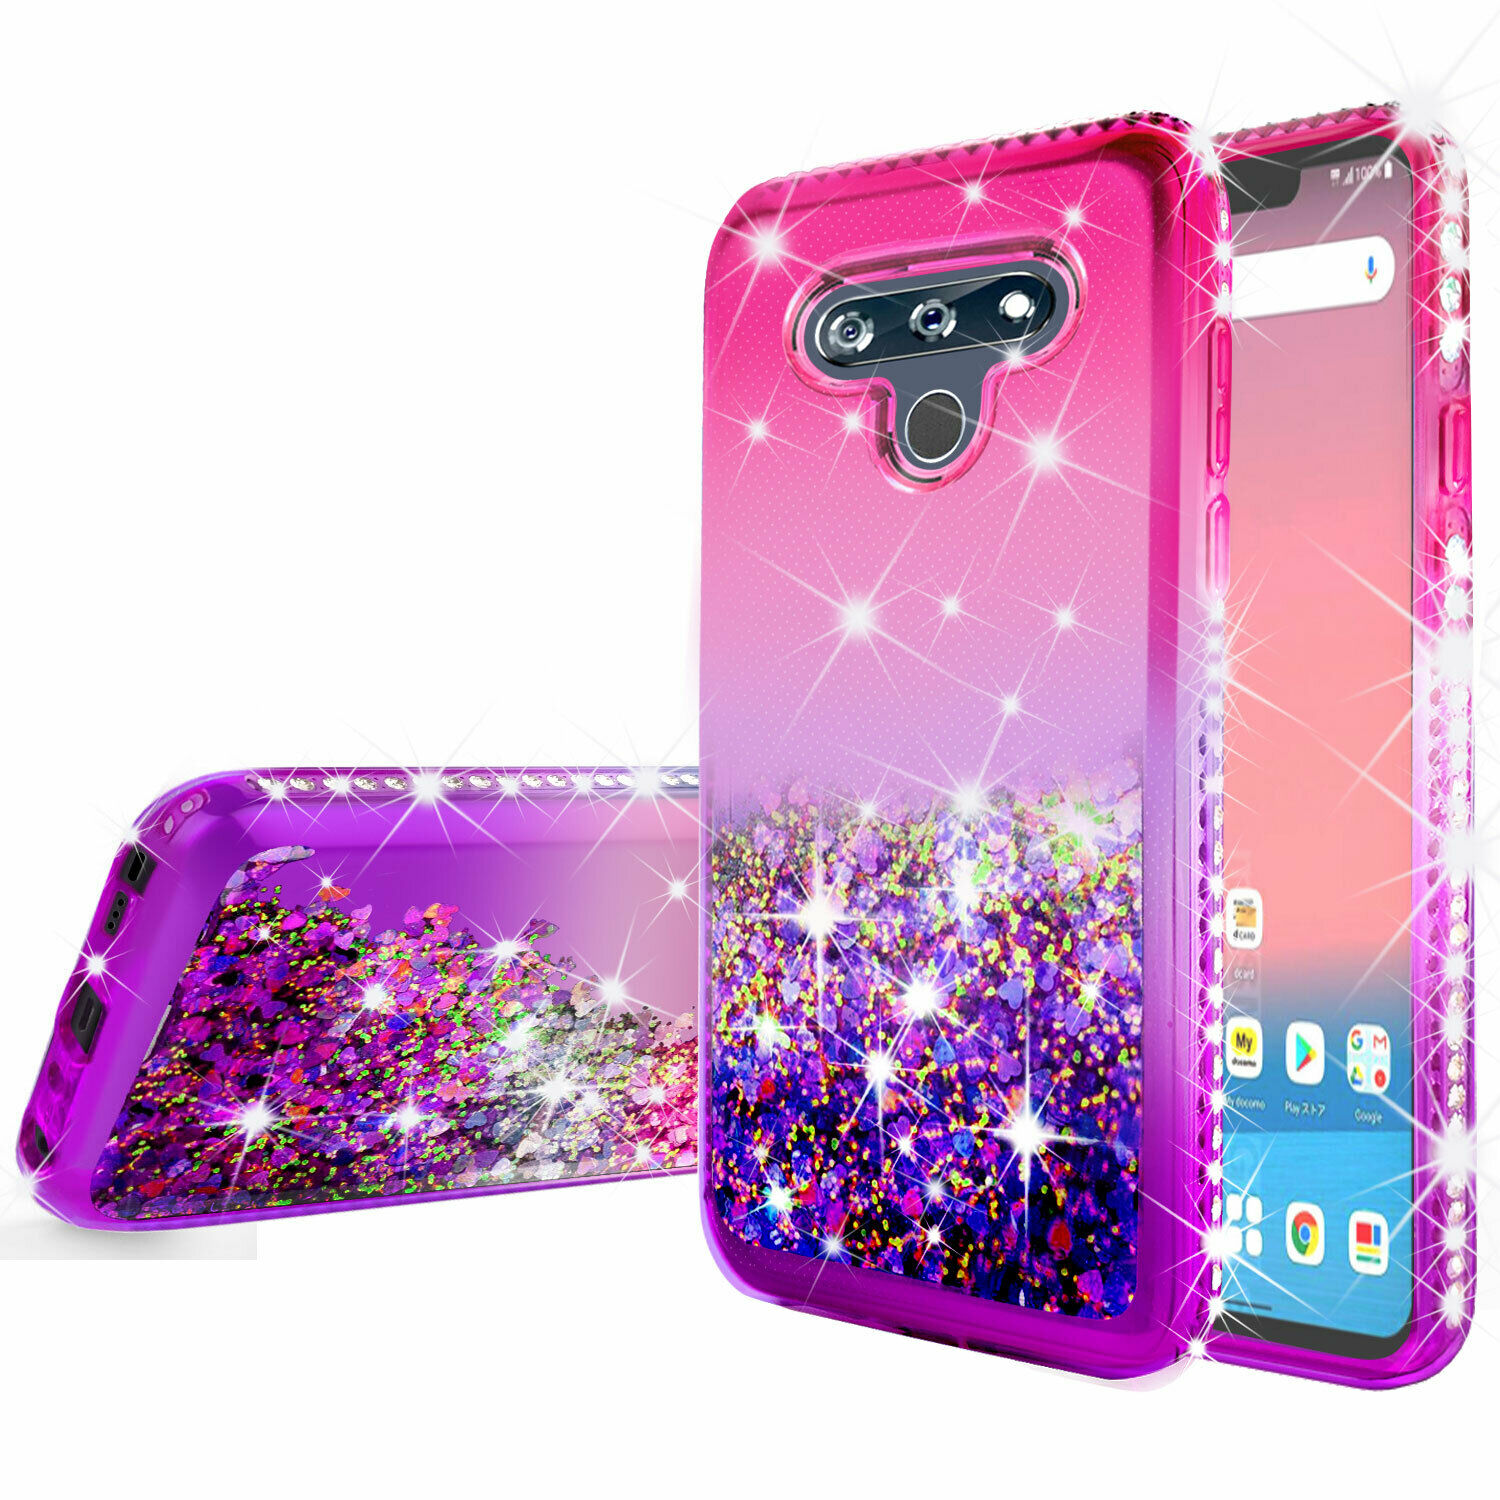 LG LG Harmony 4, Premier Pro Plus L455DL Case w[Temper Glass] Cute Liquid Glitter Bling Diamond Bumper Girls Women Phone Case for LG LG Harmony 4, Premier Pro Plus L455DL - Pink/Purple - image 2 of 5